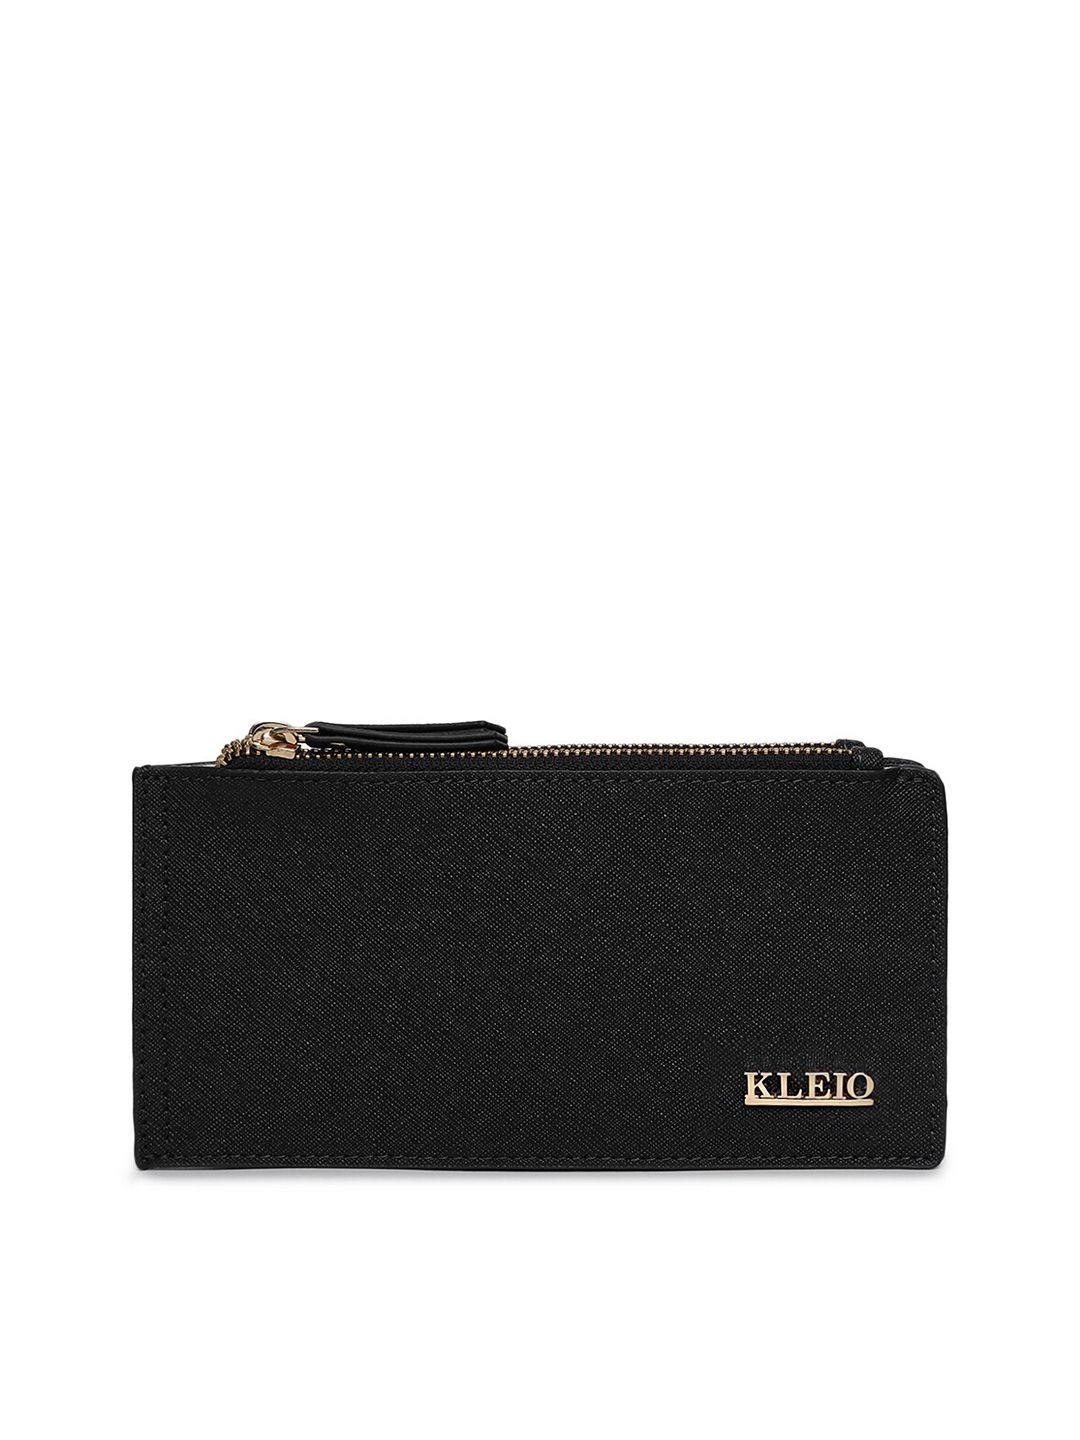 KLEIO Women Black Two Fold Wallet with Mobile Slot Price in India